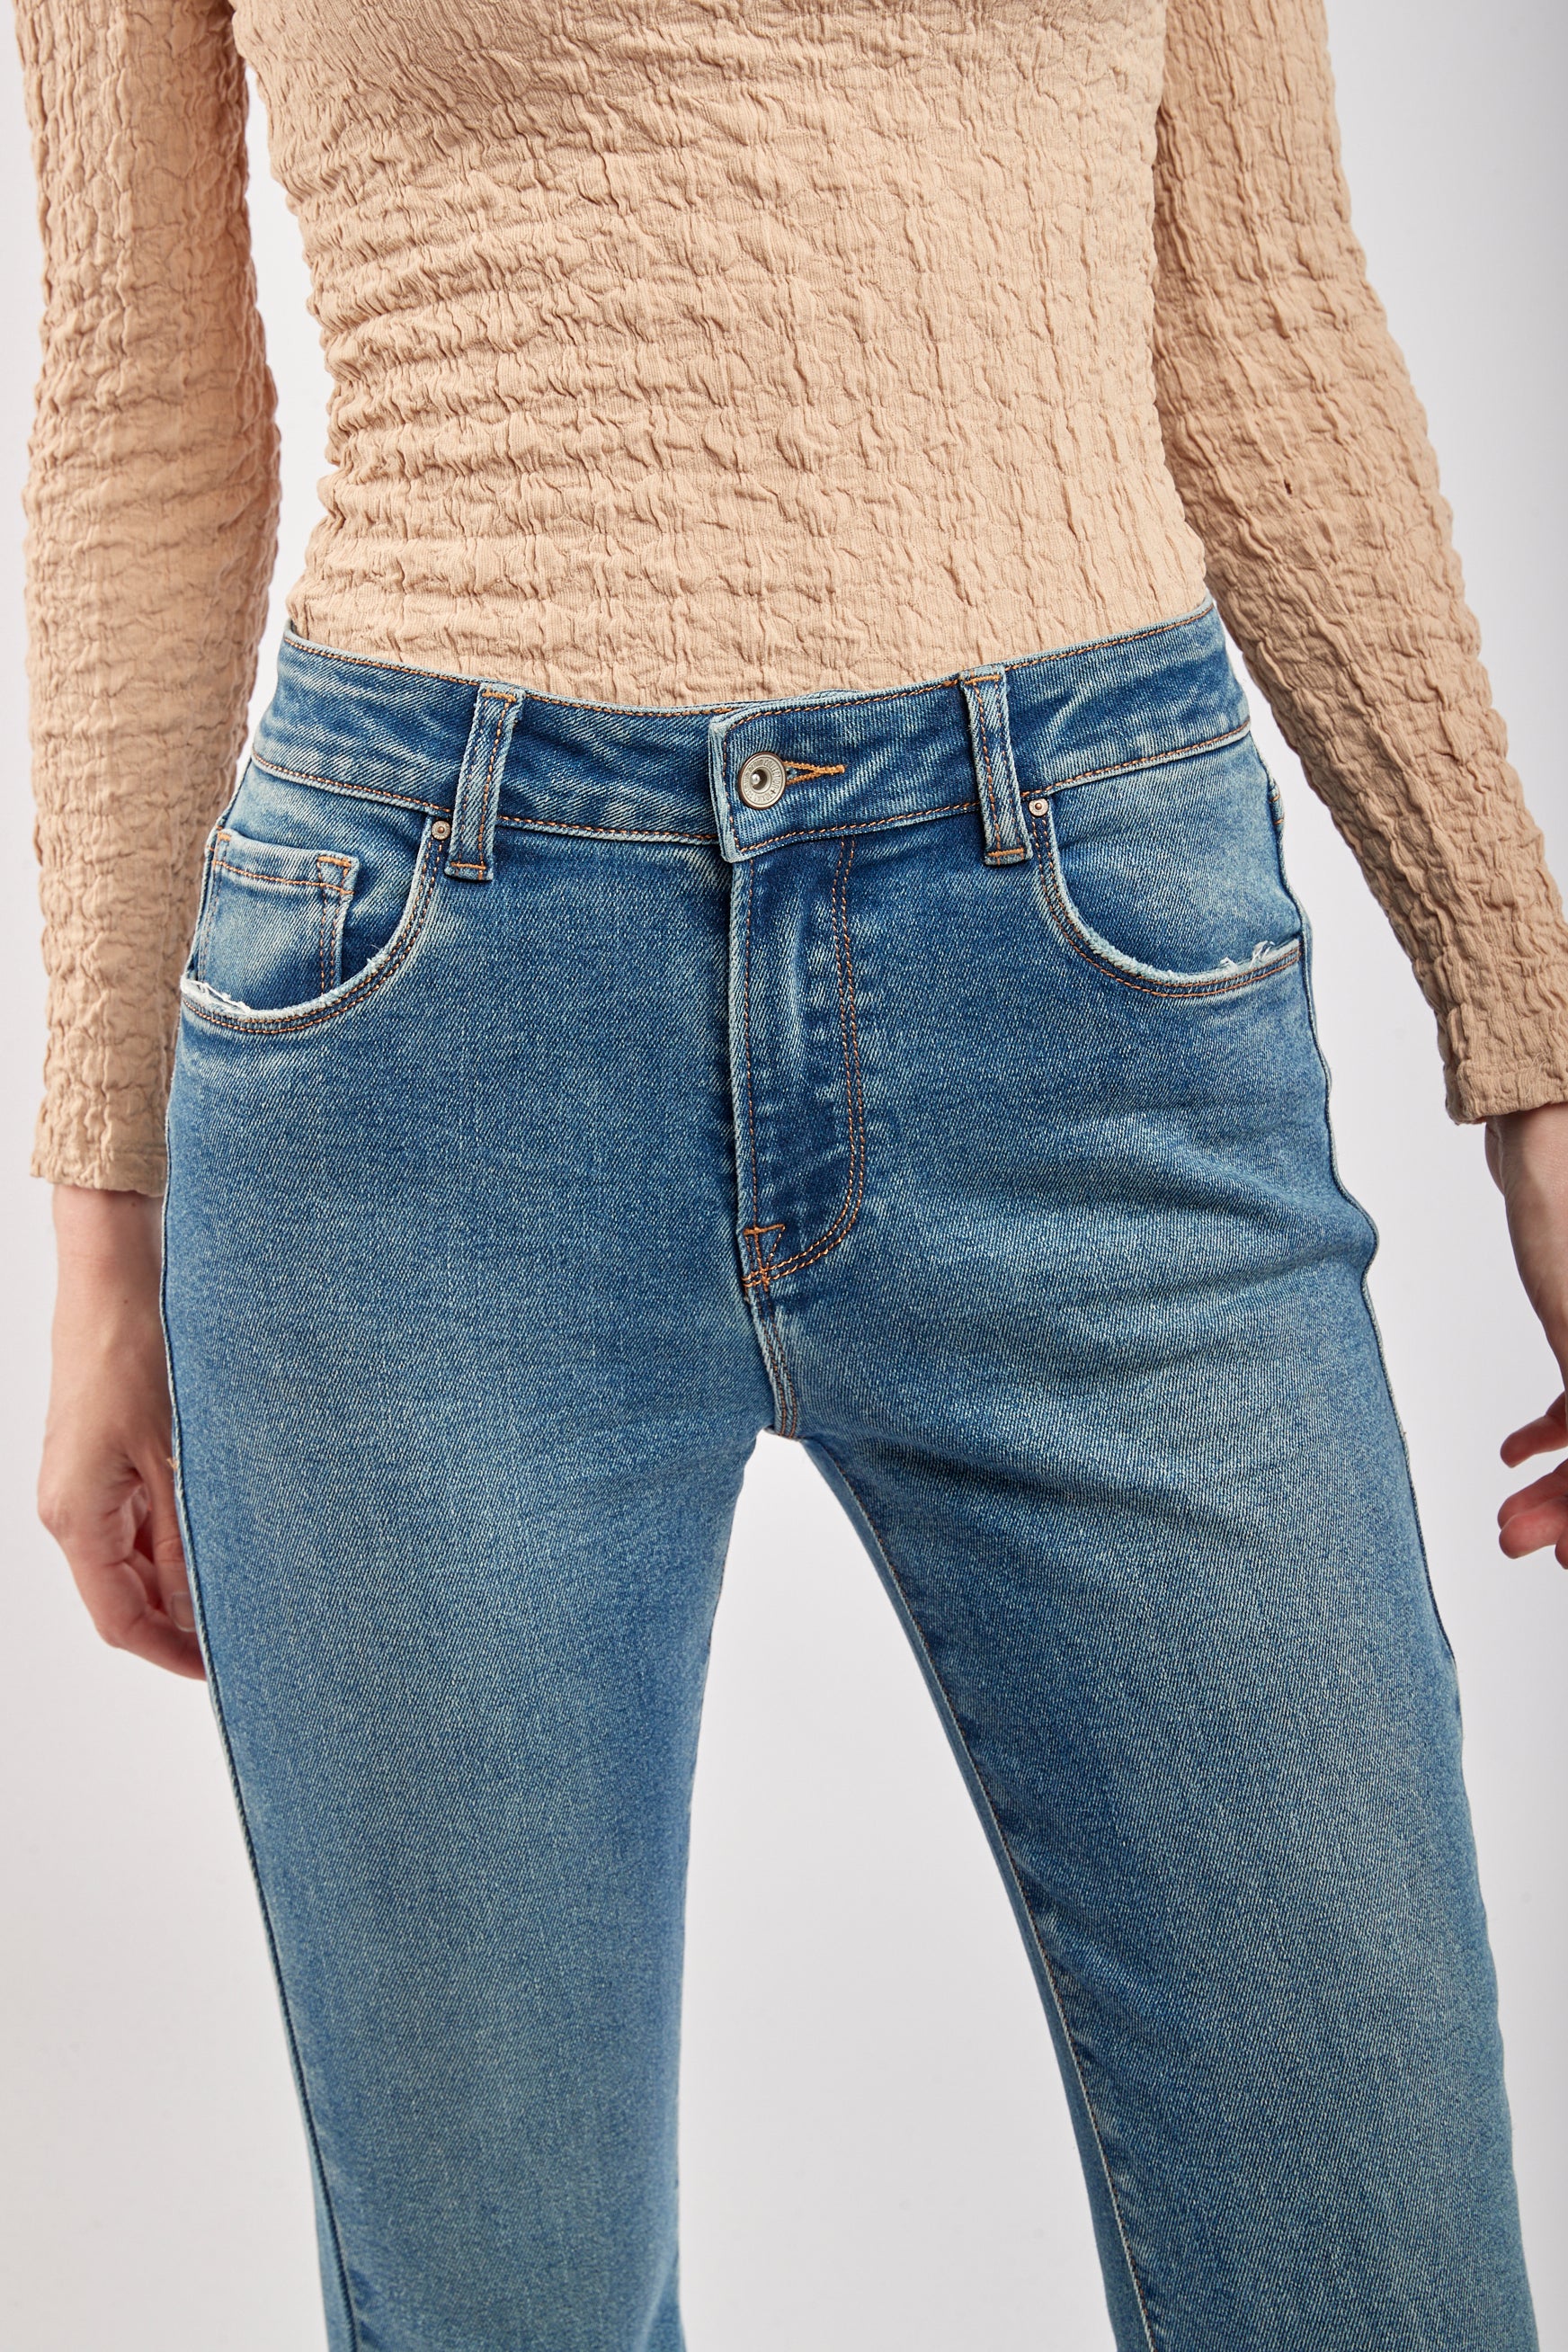 Olifant jeans - yael